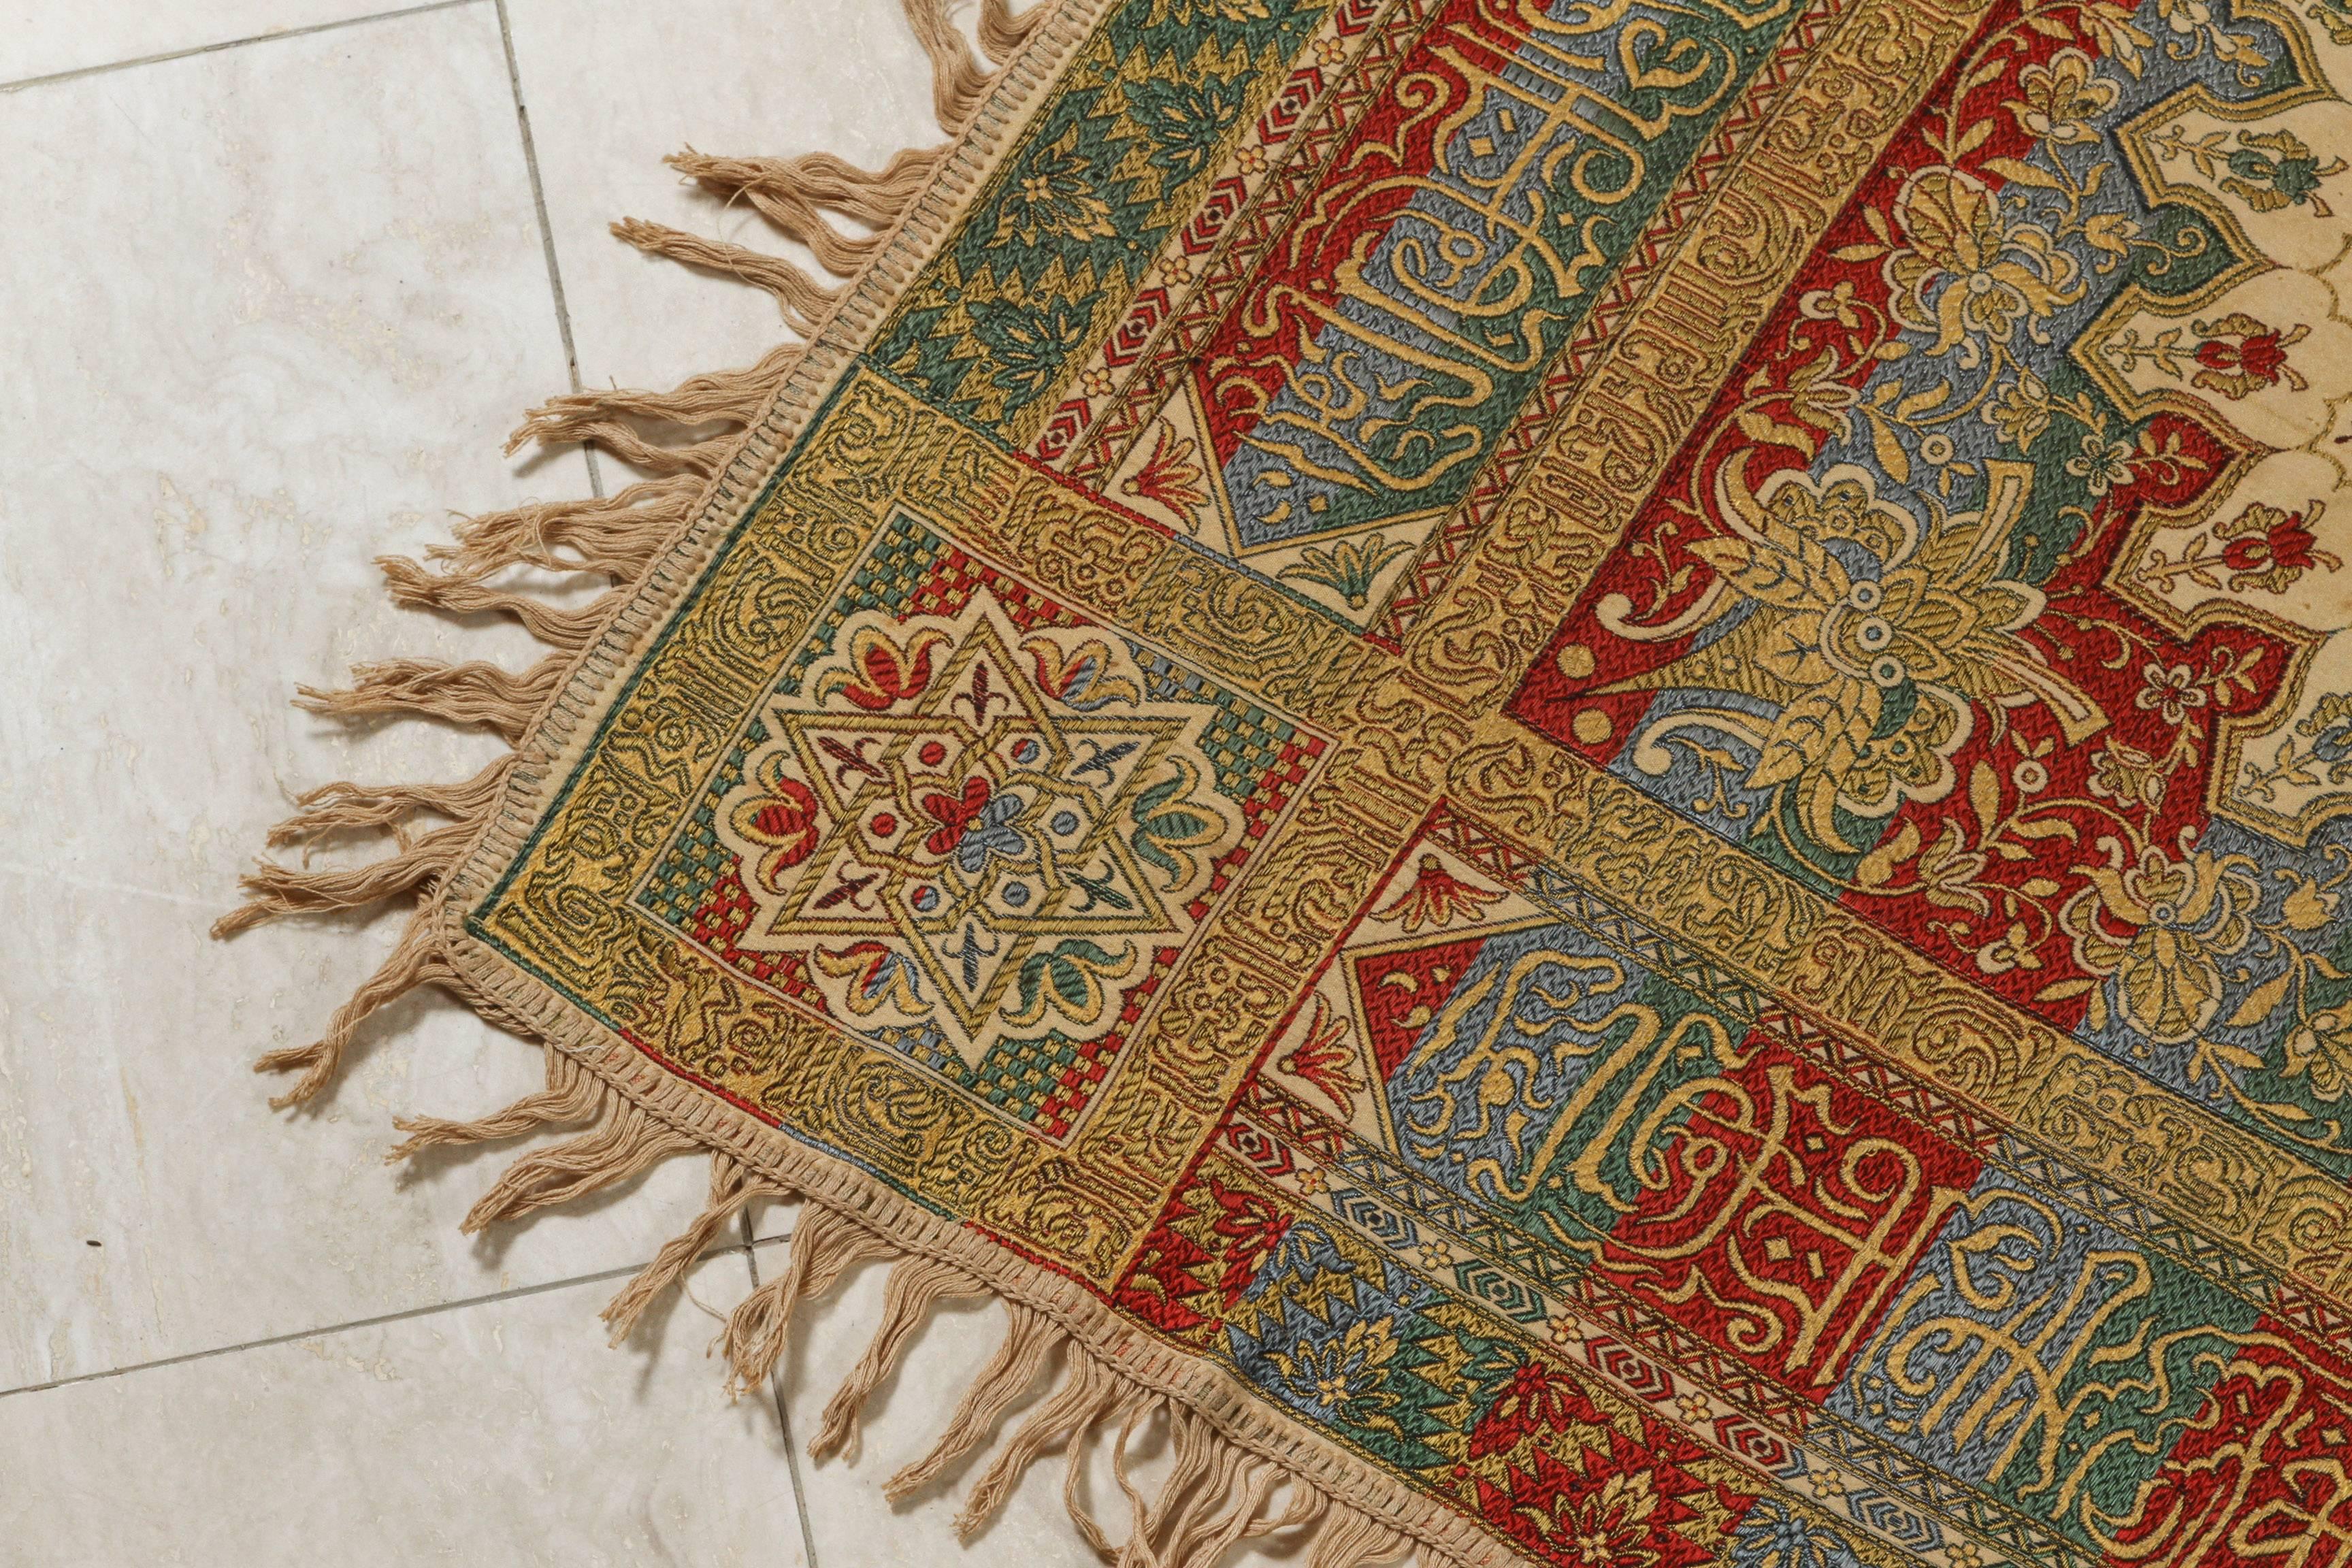 Hand-Crafted Granada Islamic Spain Moorish Textile with Arabic Calligraphy Writing